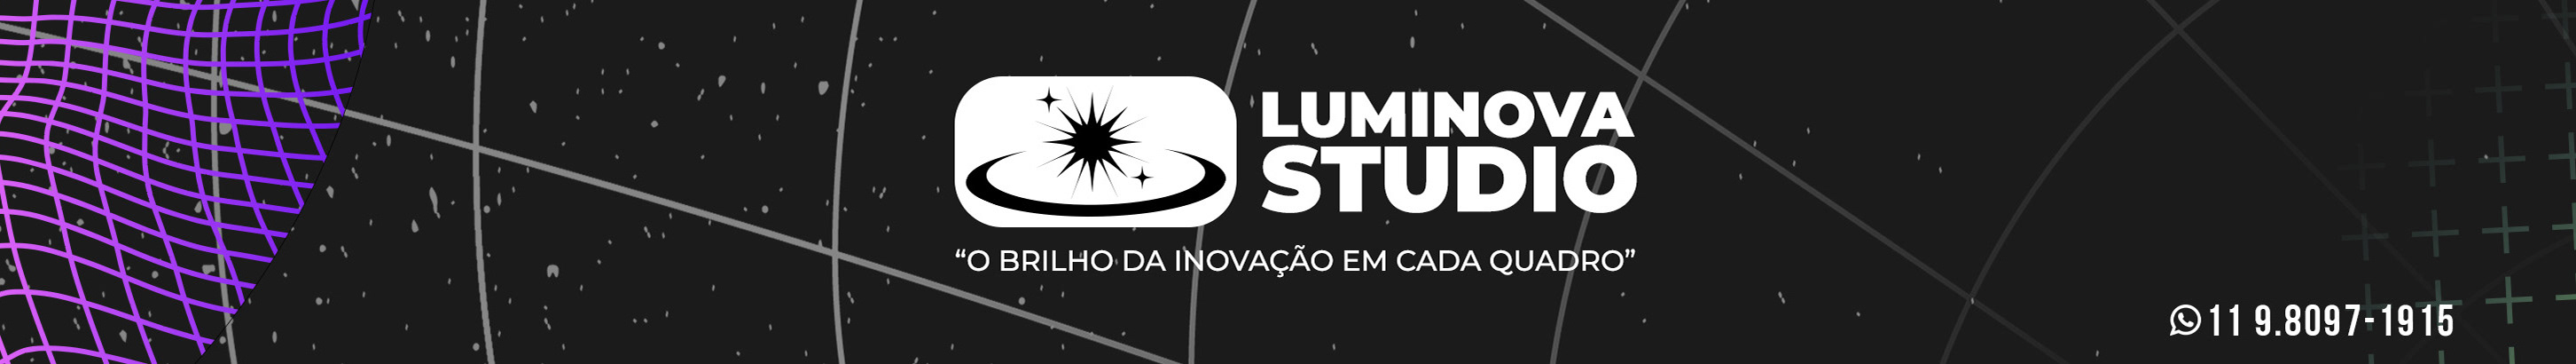 Lucas Lima's profile banner